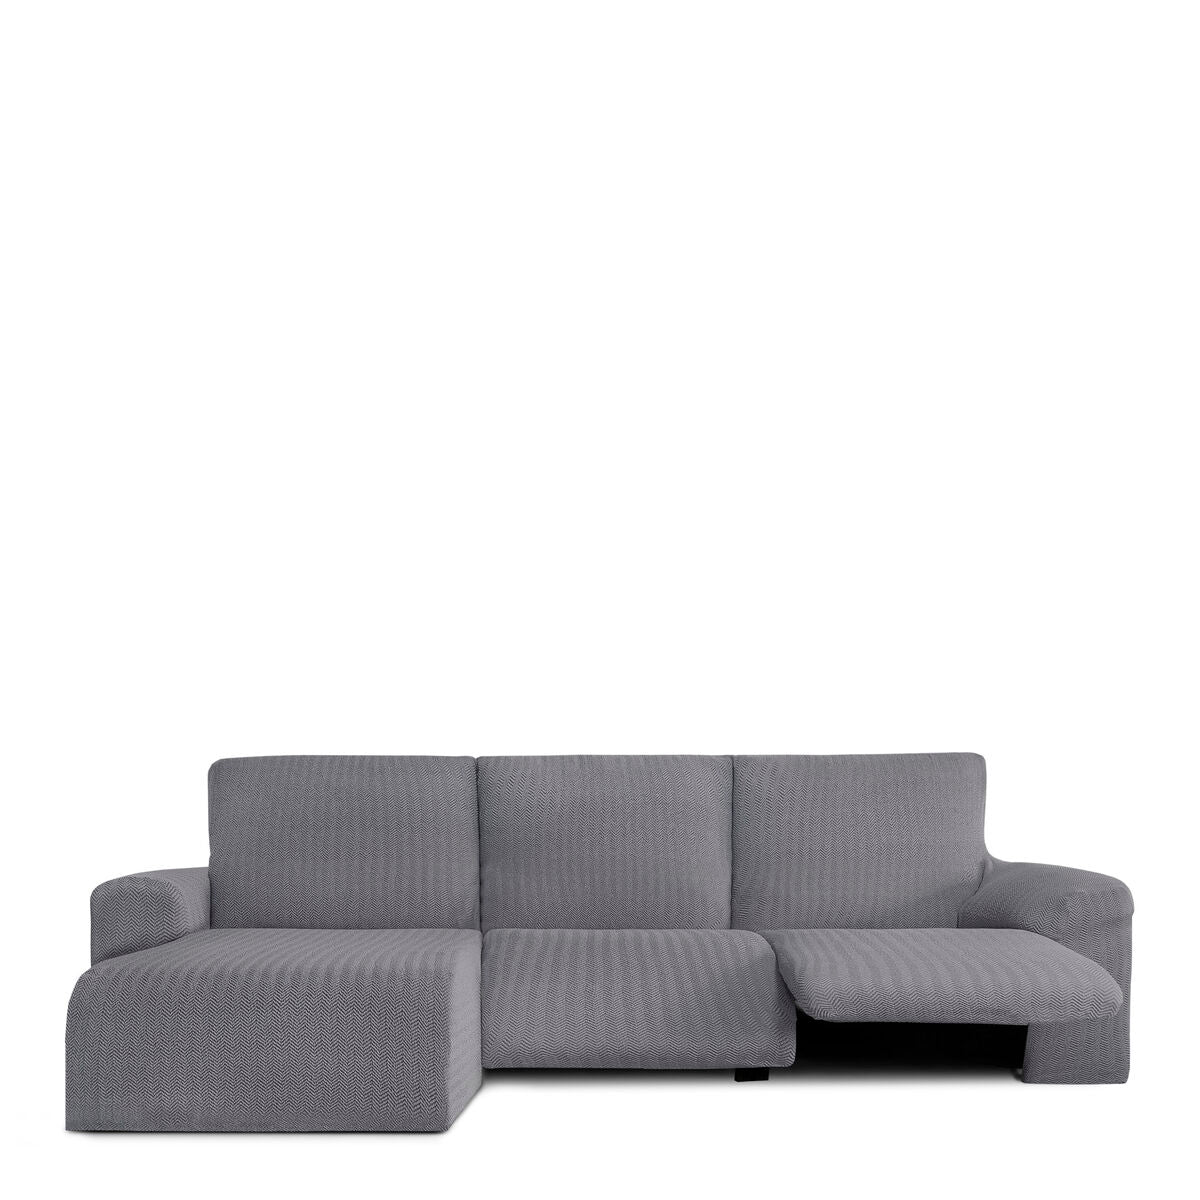 Copertura per sedia a lunghezza a sinistra lunga Eysa jaz grigio 120 x 120 x 360 cm